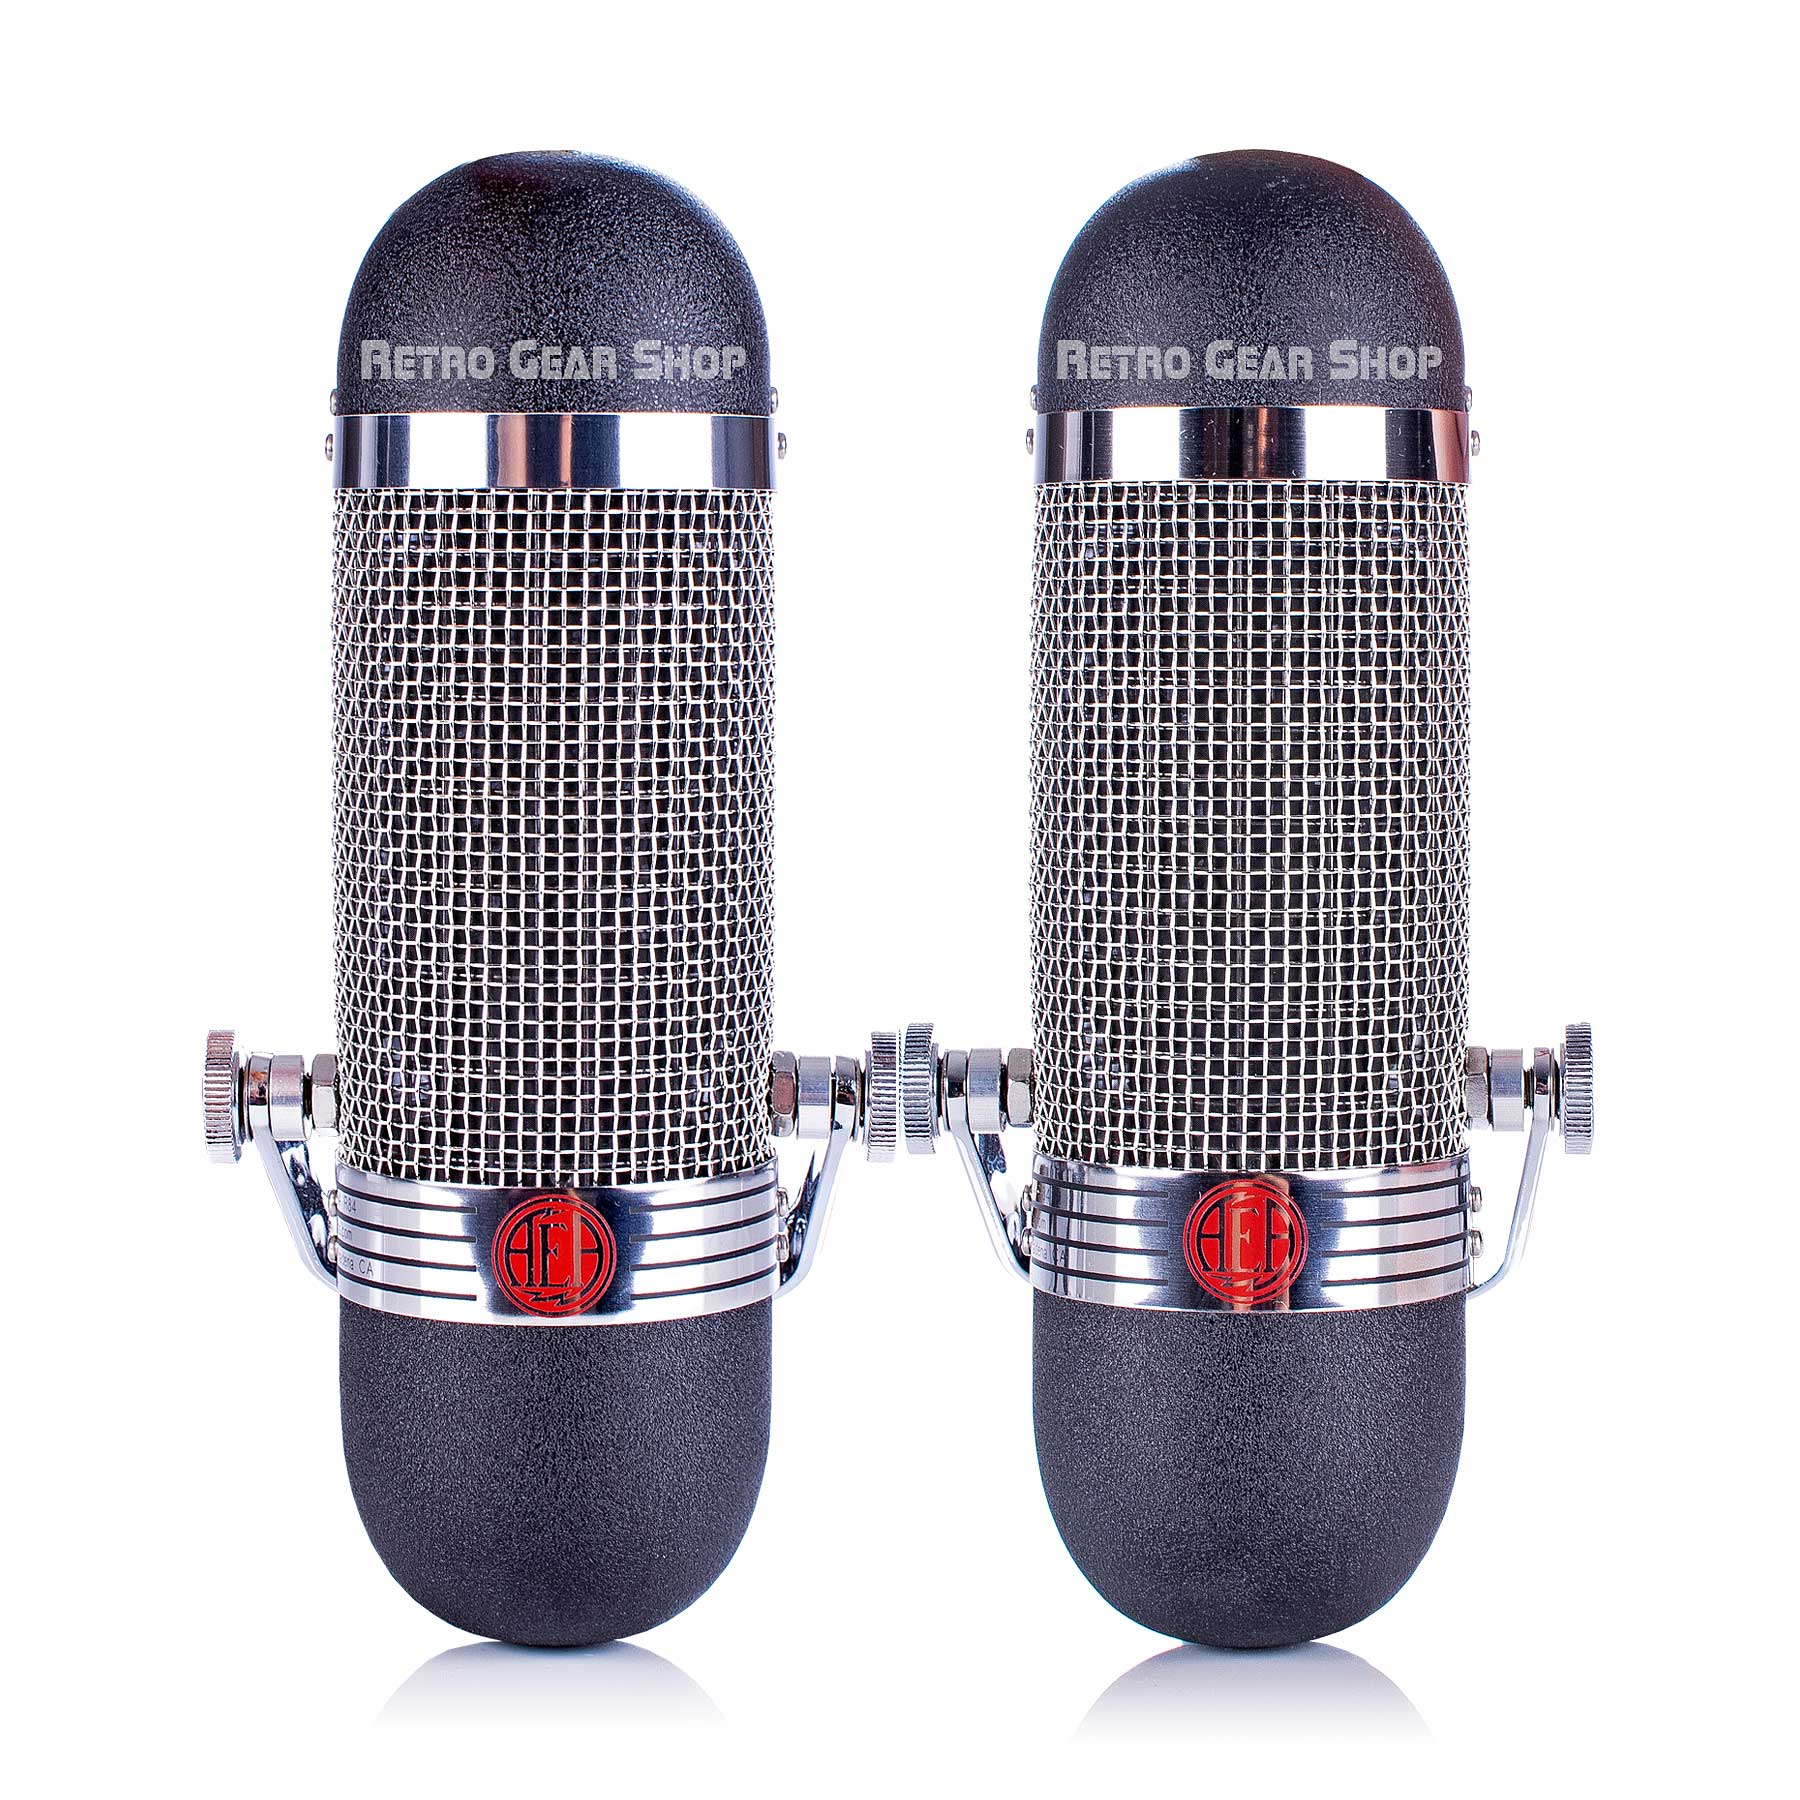 AEA R84 Passive Ribbon Microphone